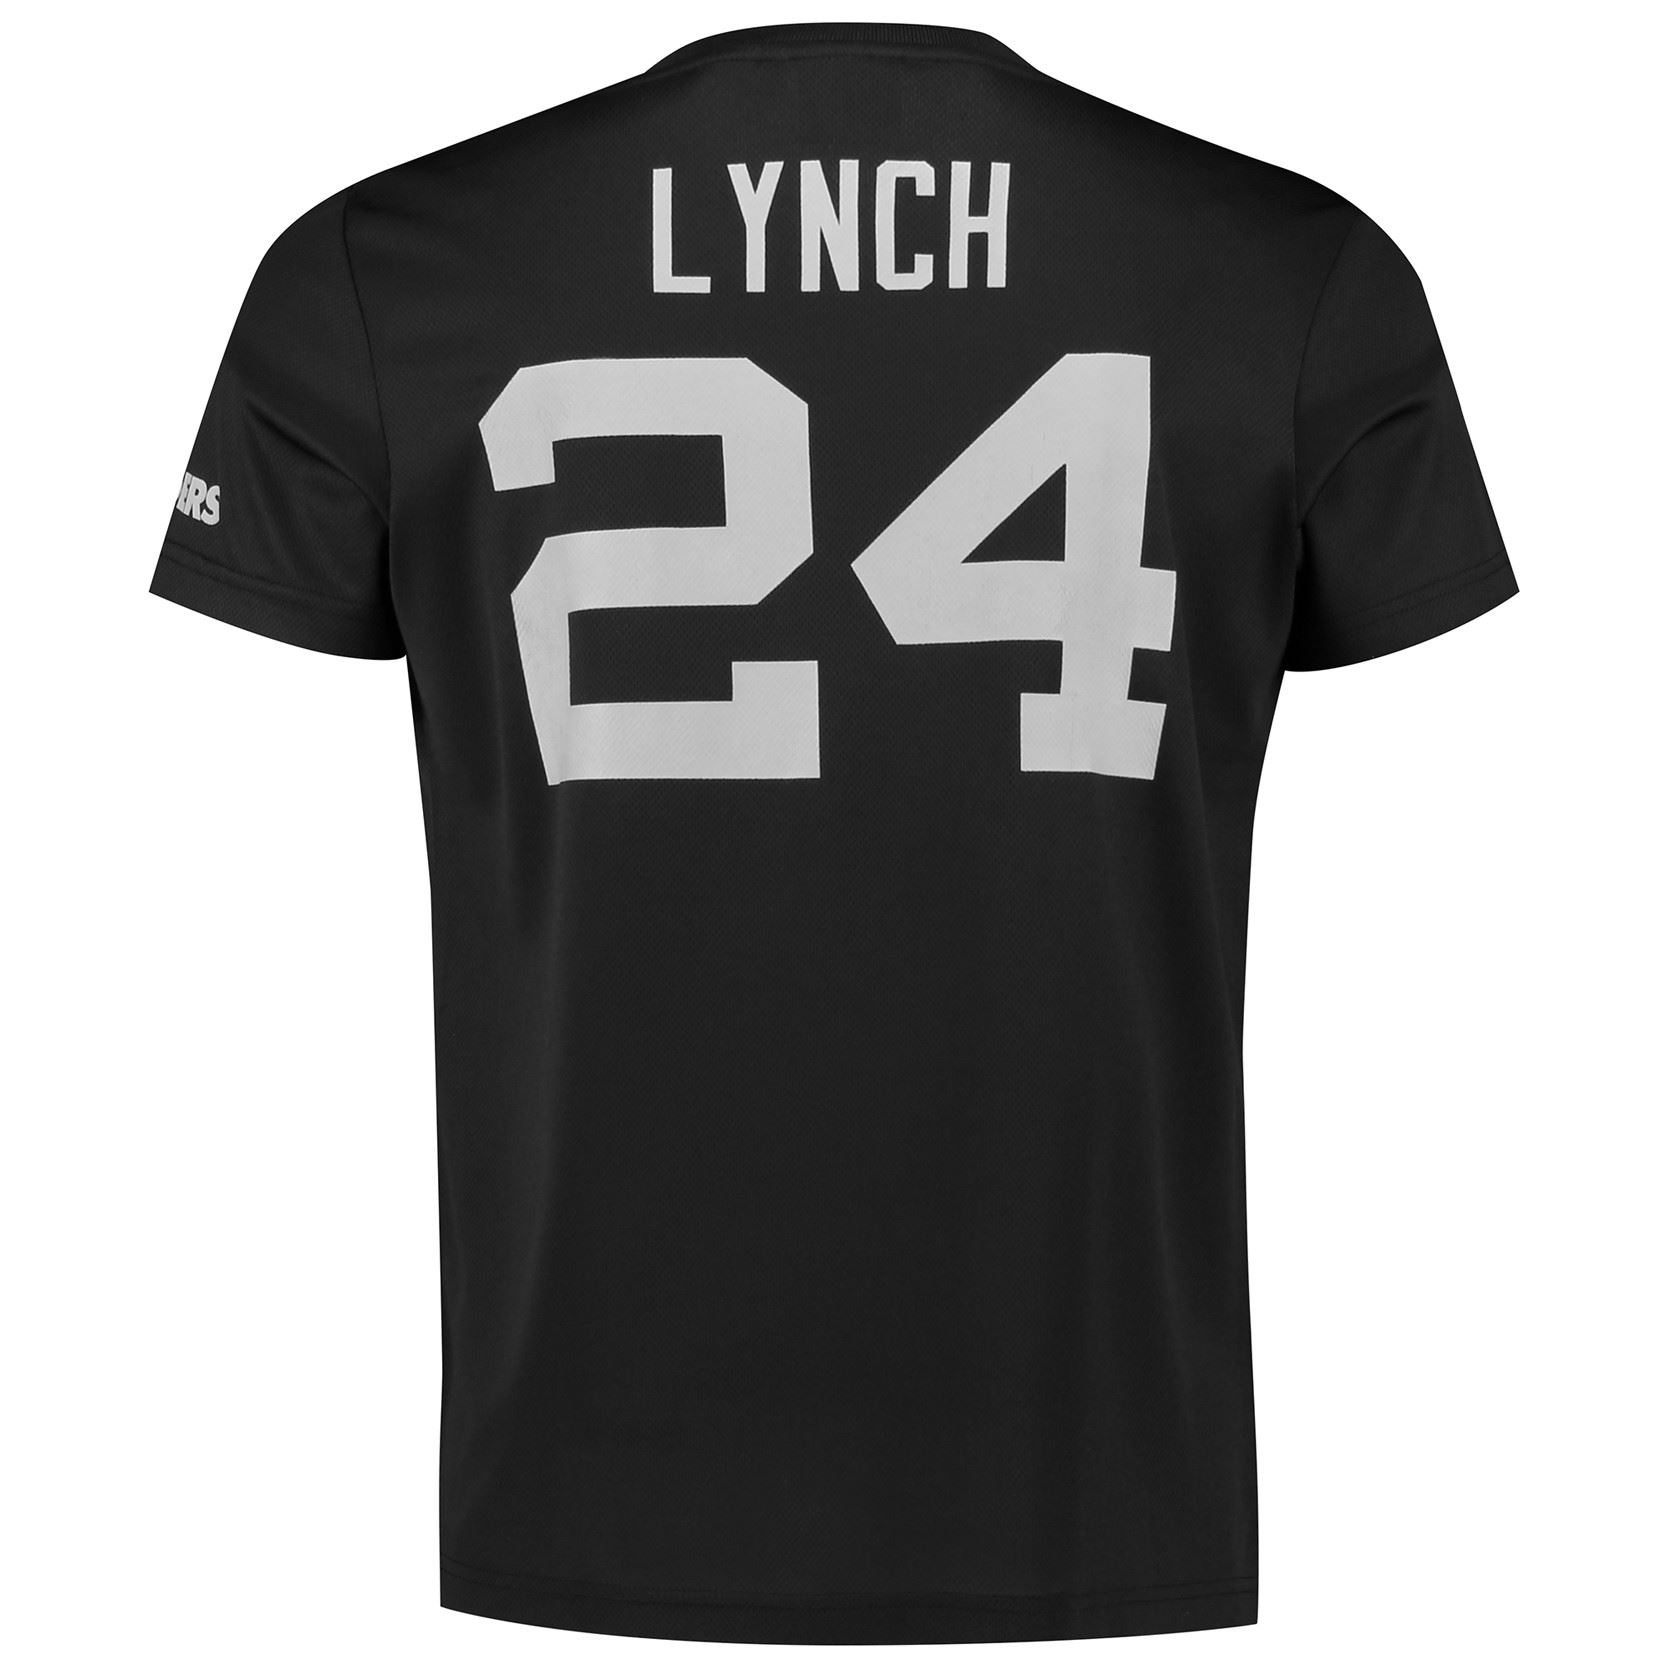 Lynch 24 Oakland Raiders Name & Number Majestics NFL T-Shirt Fanatics